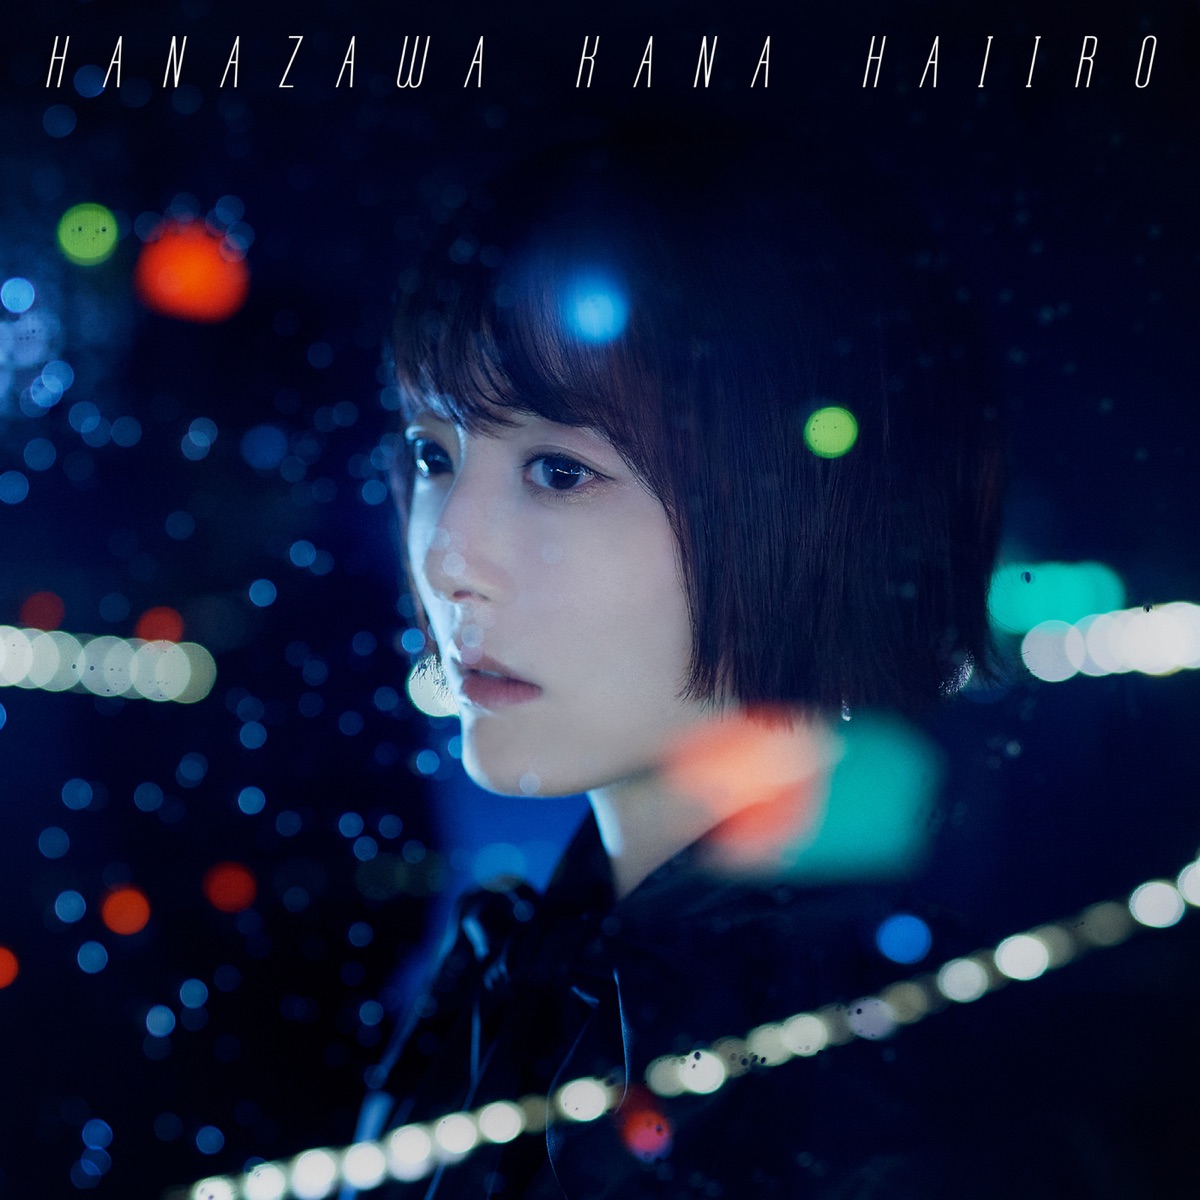 Cover art for『Kana Hanazawa - 灰色』from the release『Haiiro